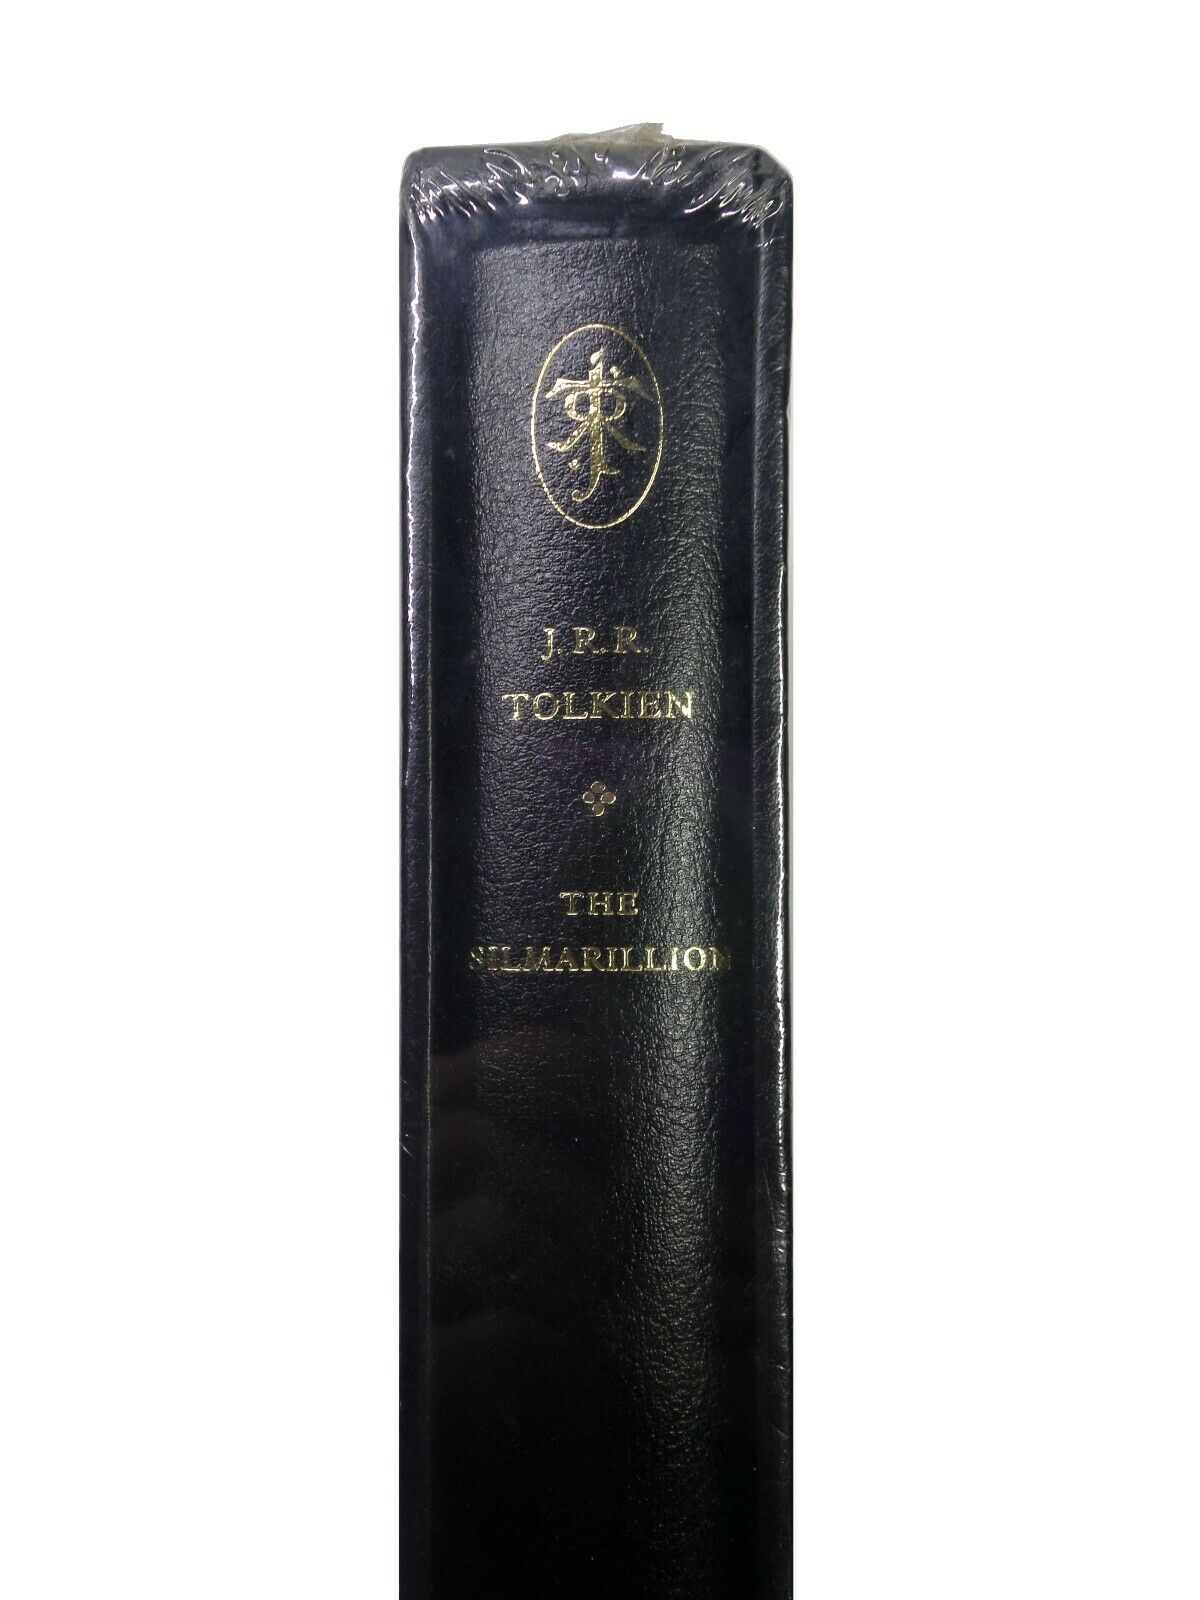 THE SILMARILLION BY J. R. R. TOLKIEN 2002 HarperCollins Deluxe 